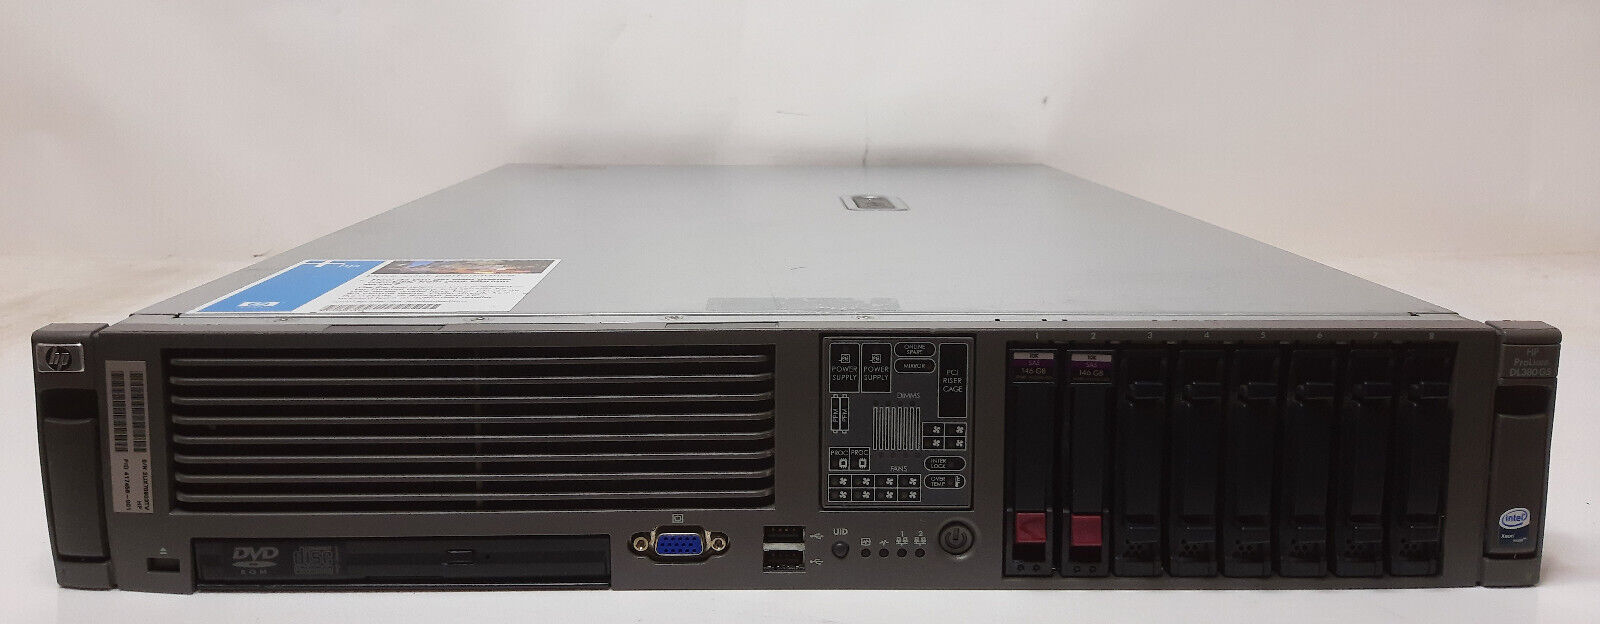 HP PROLIANT DL380 GEN5 SINGLE INTEL XEON 5140 2.33GHZ 2GB RAM NO HDDS/OS HP P400 (USADO)